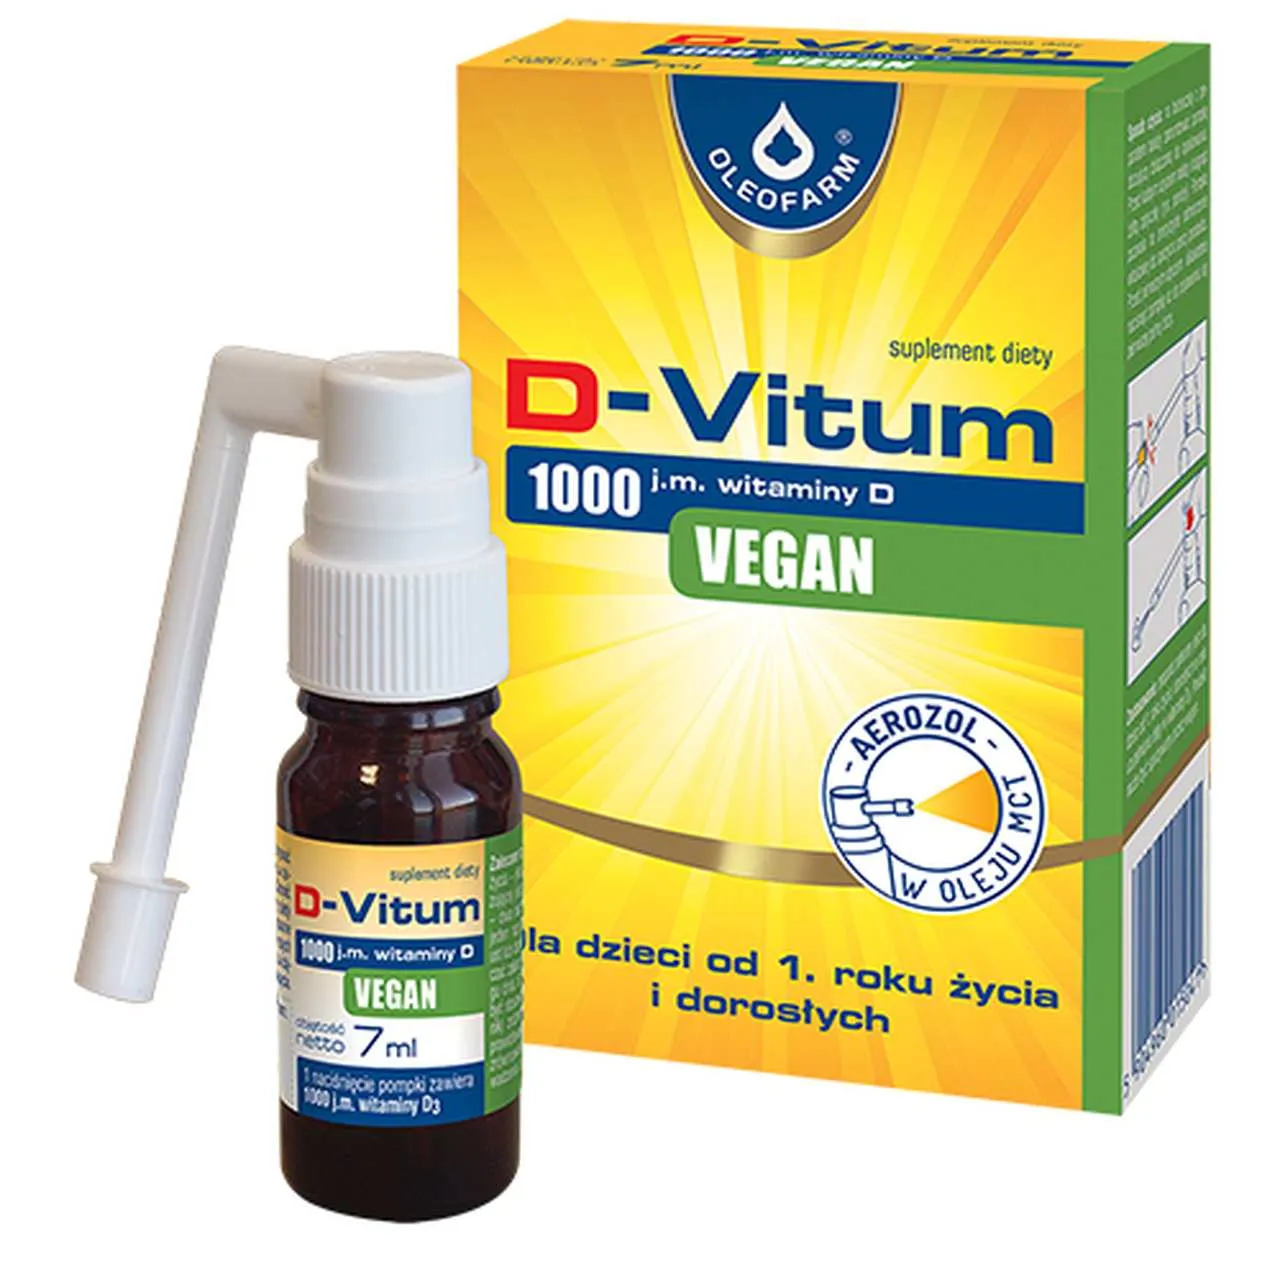 D-vitum Vegan, suplement diety, aerozol, 7 ml